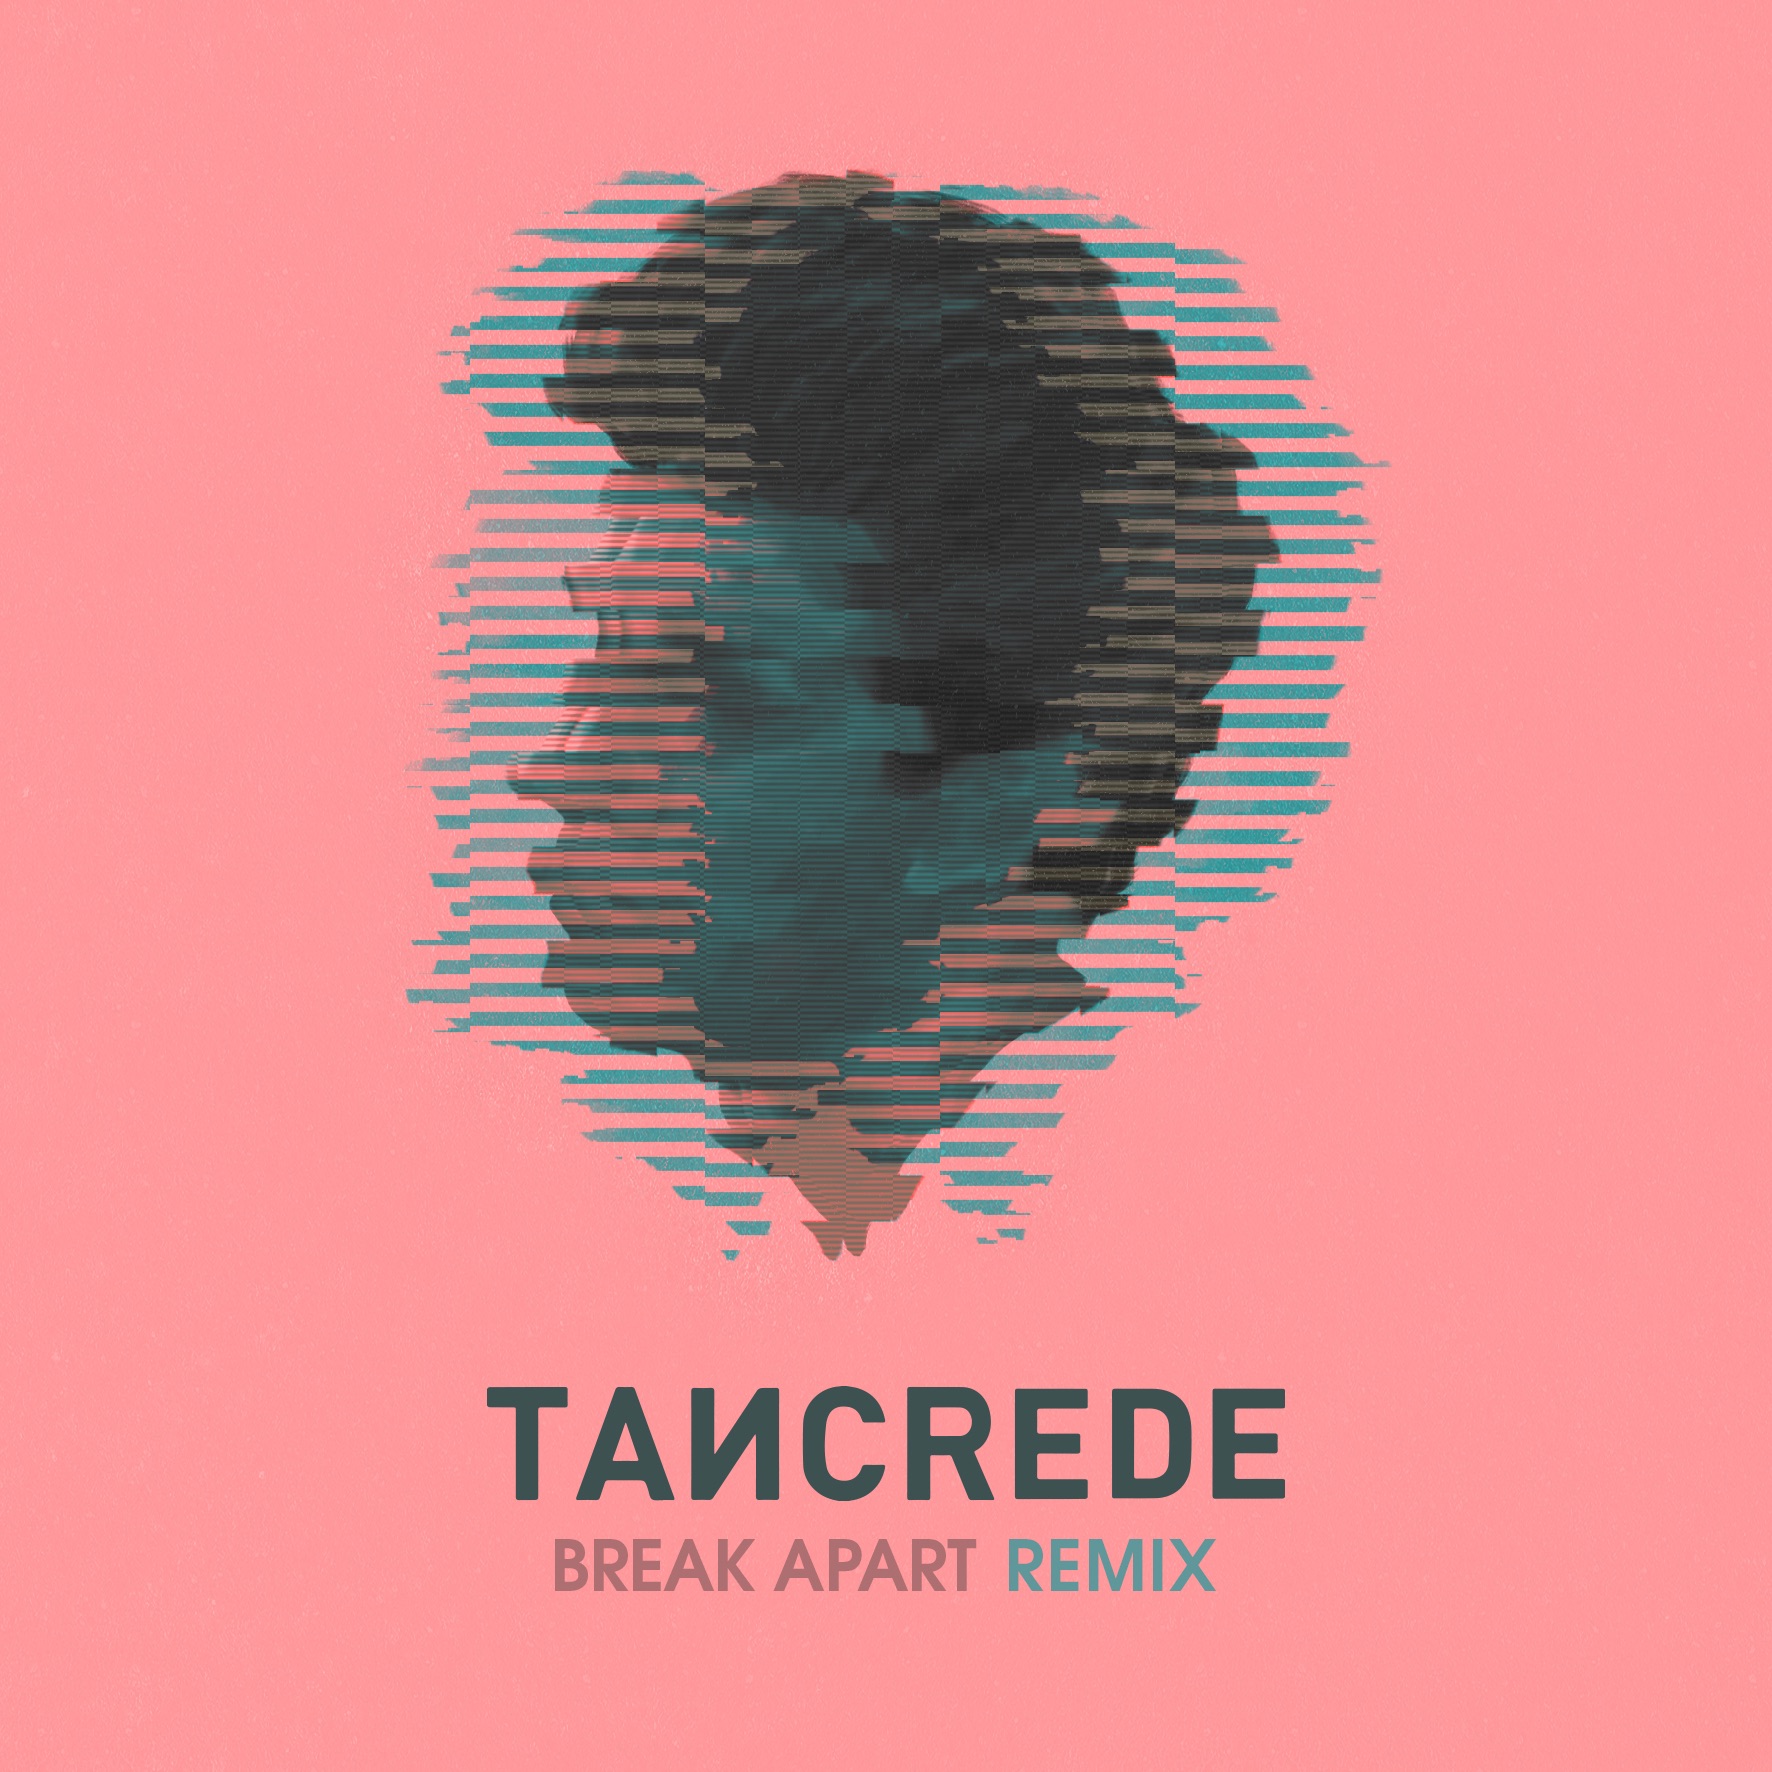 Bonobo – “Break Apart (Tancrede Remix)”